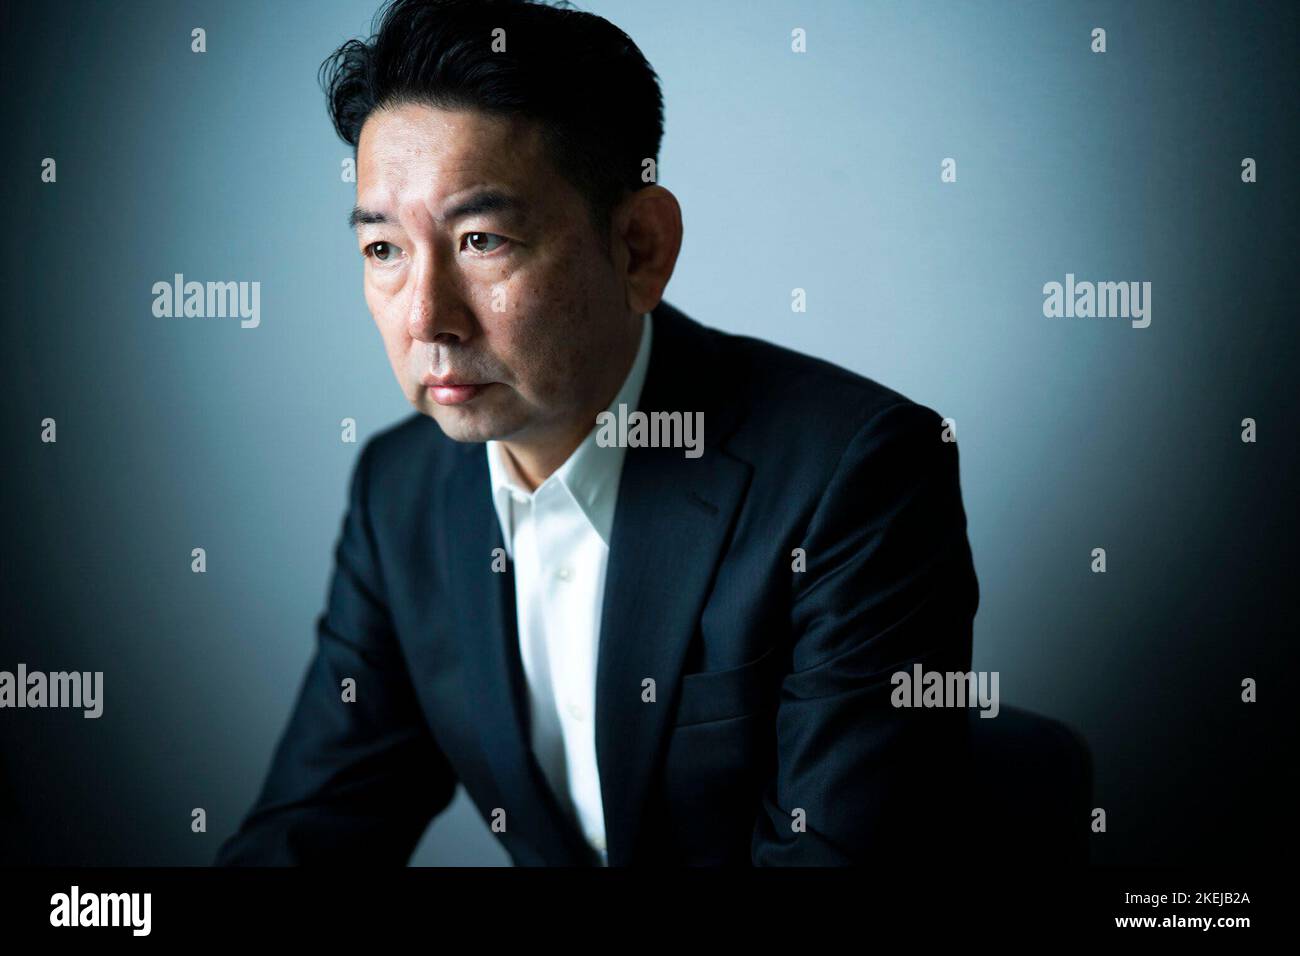 TAKASHI HIRANO in KAPPEI (2022), directed by TAKASHI HIRANO. Credit: Toho / Album Stock Photo